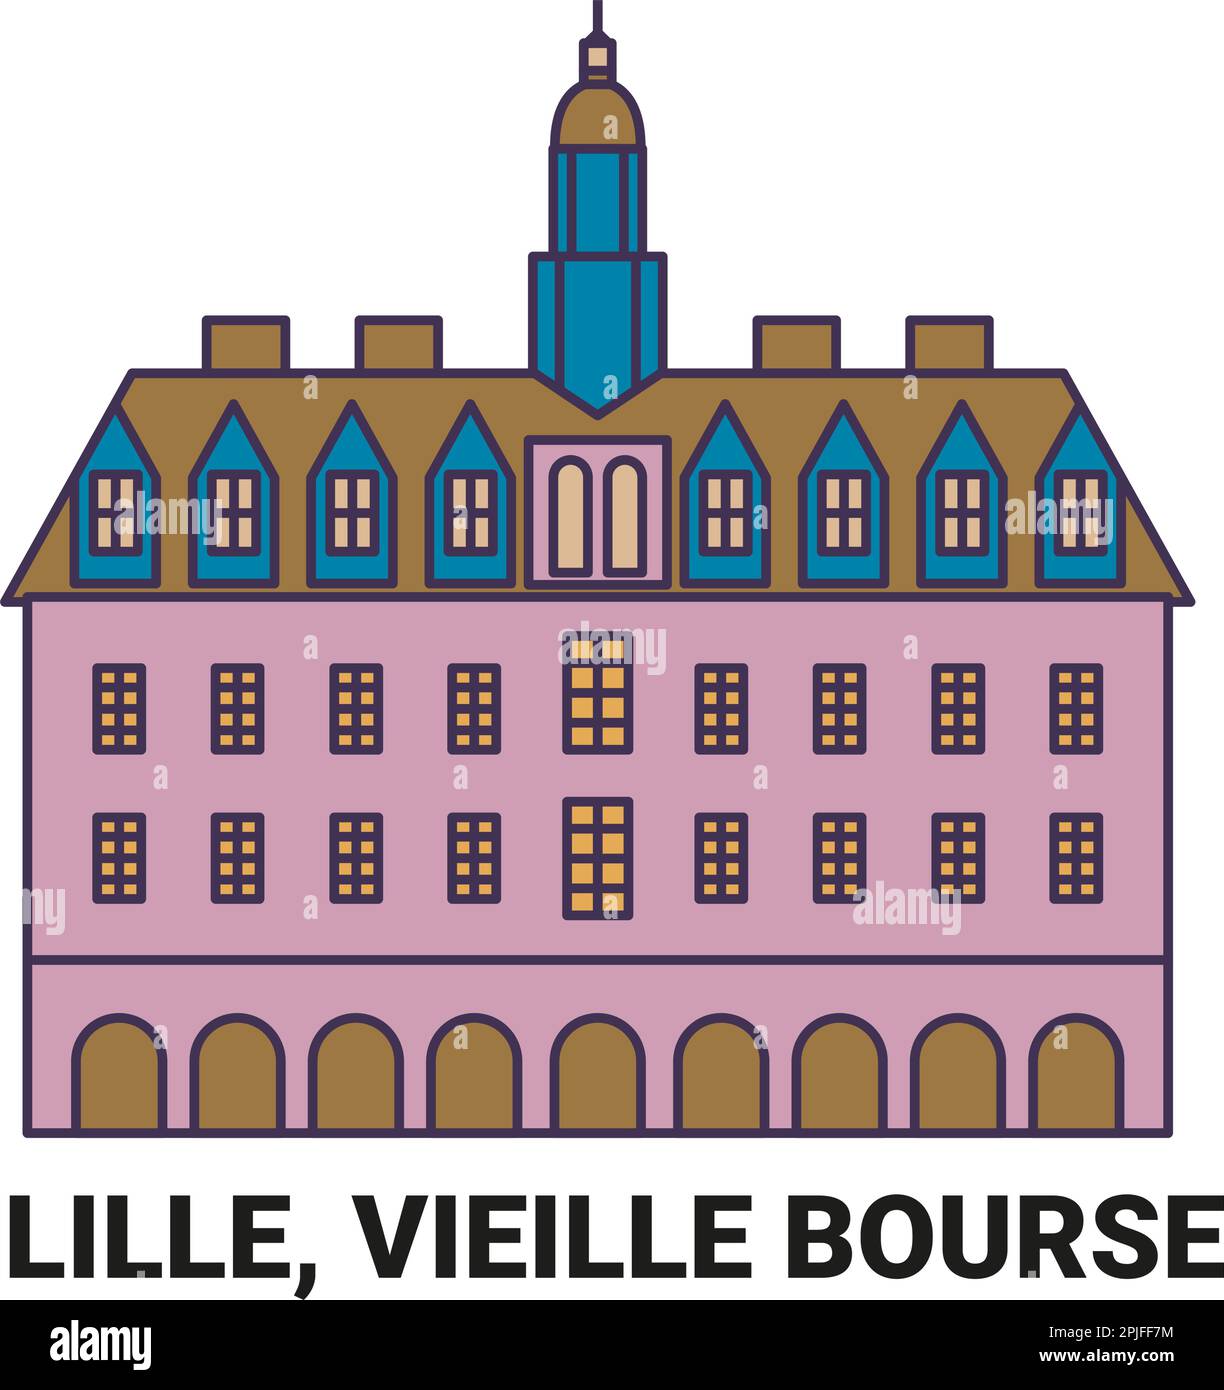 France, Lille, Vieille Bourse, travel landmark vector illustration Stock Vector